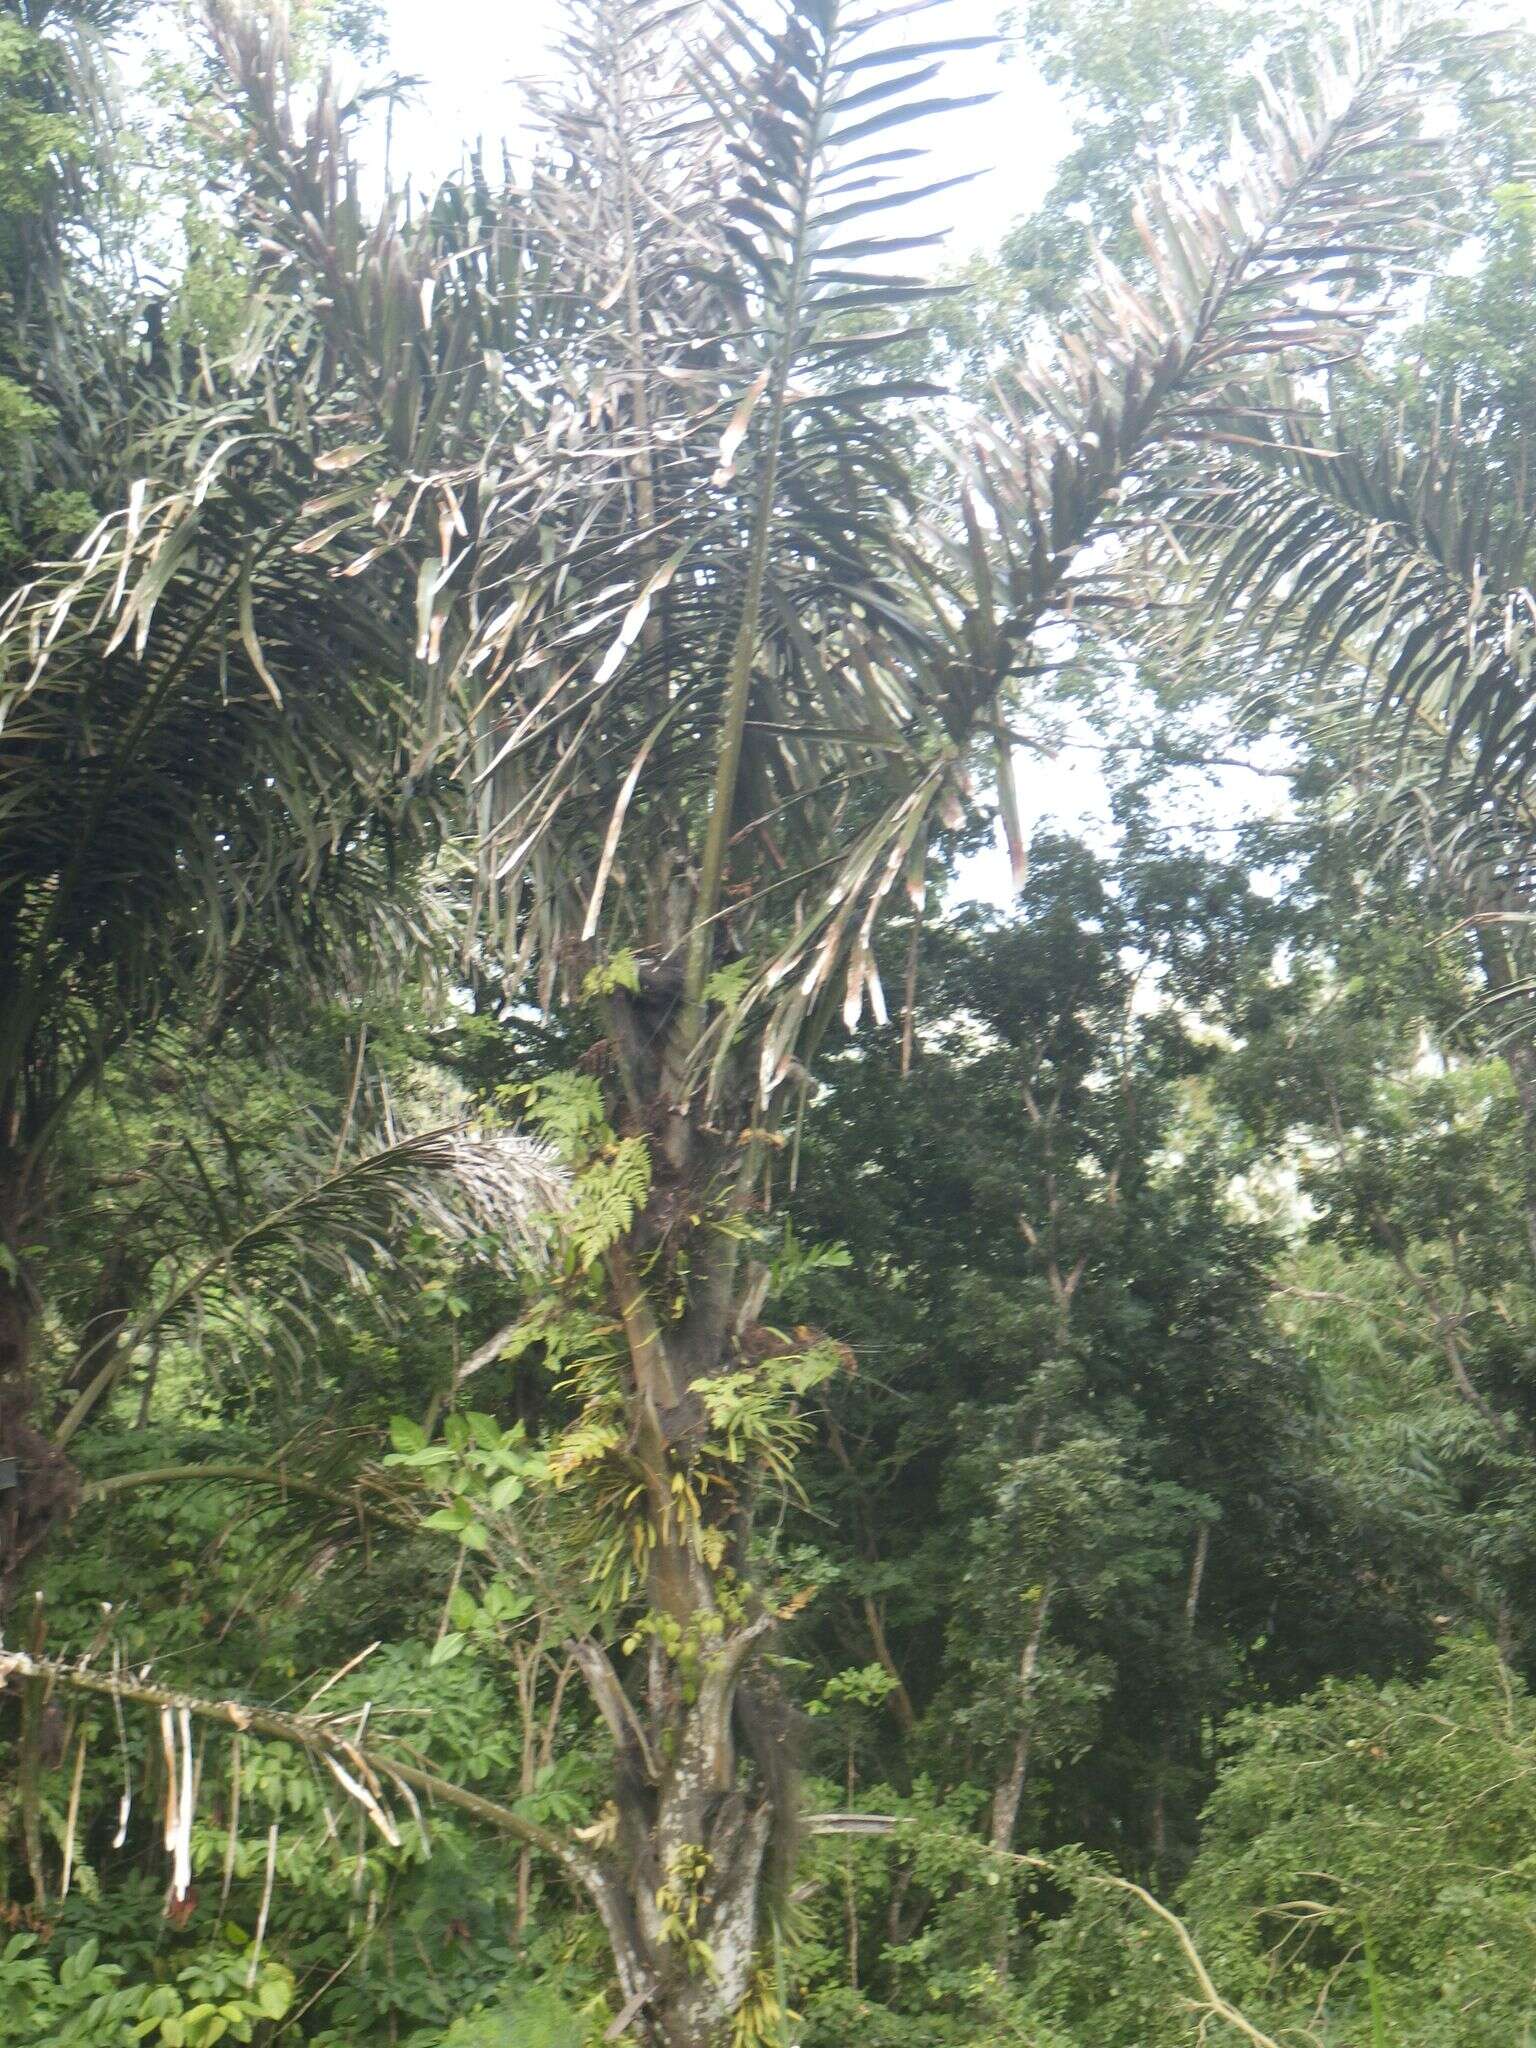 Image of sugar palm